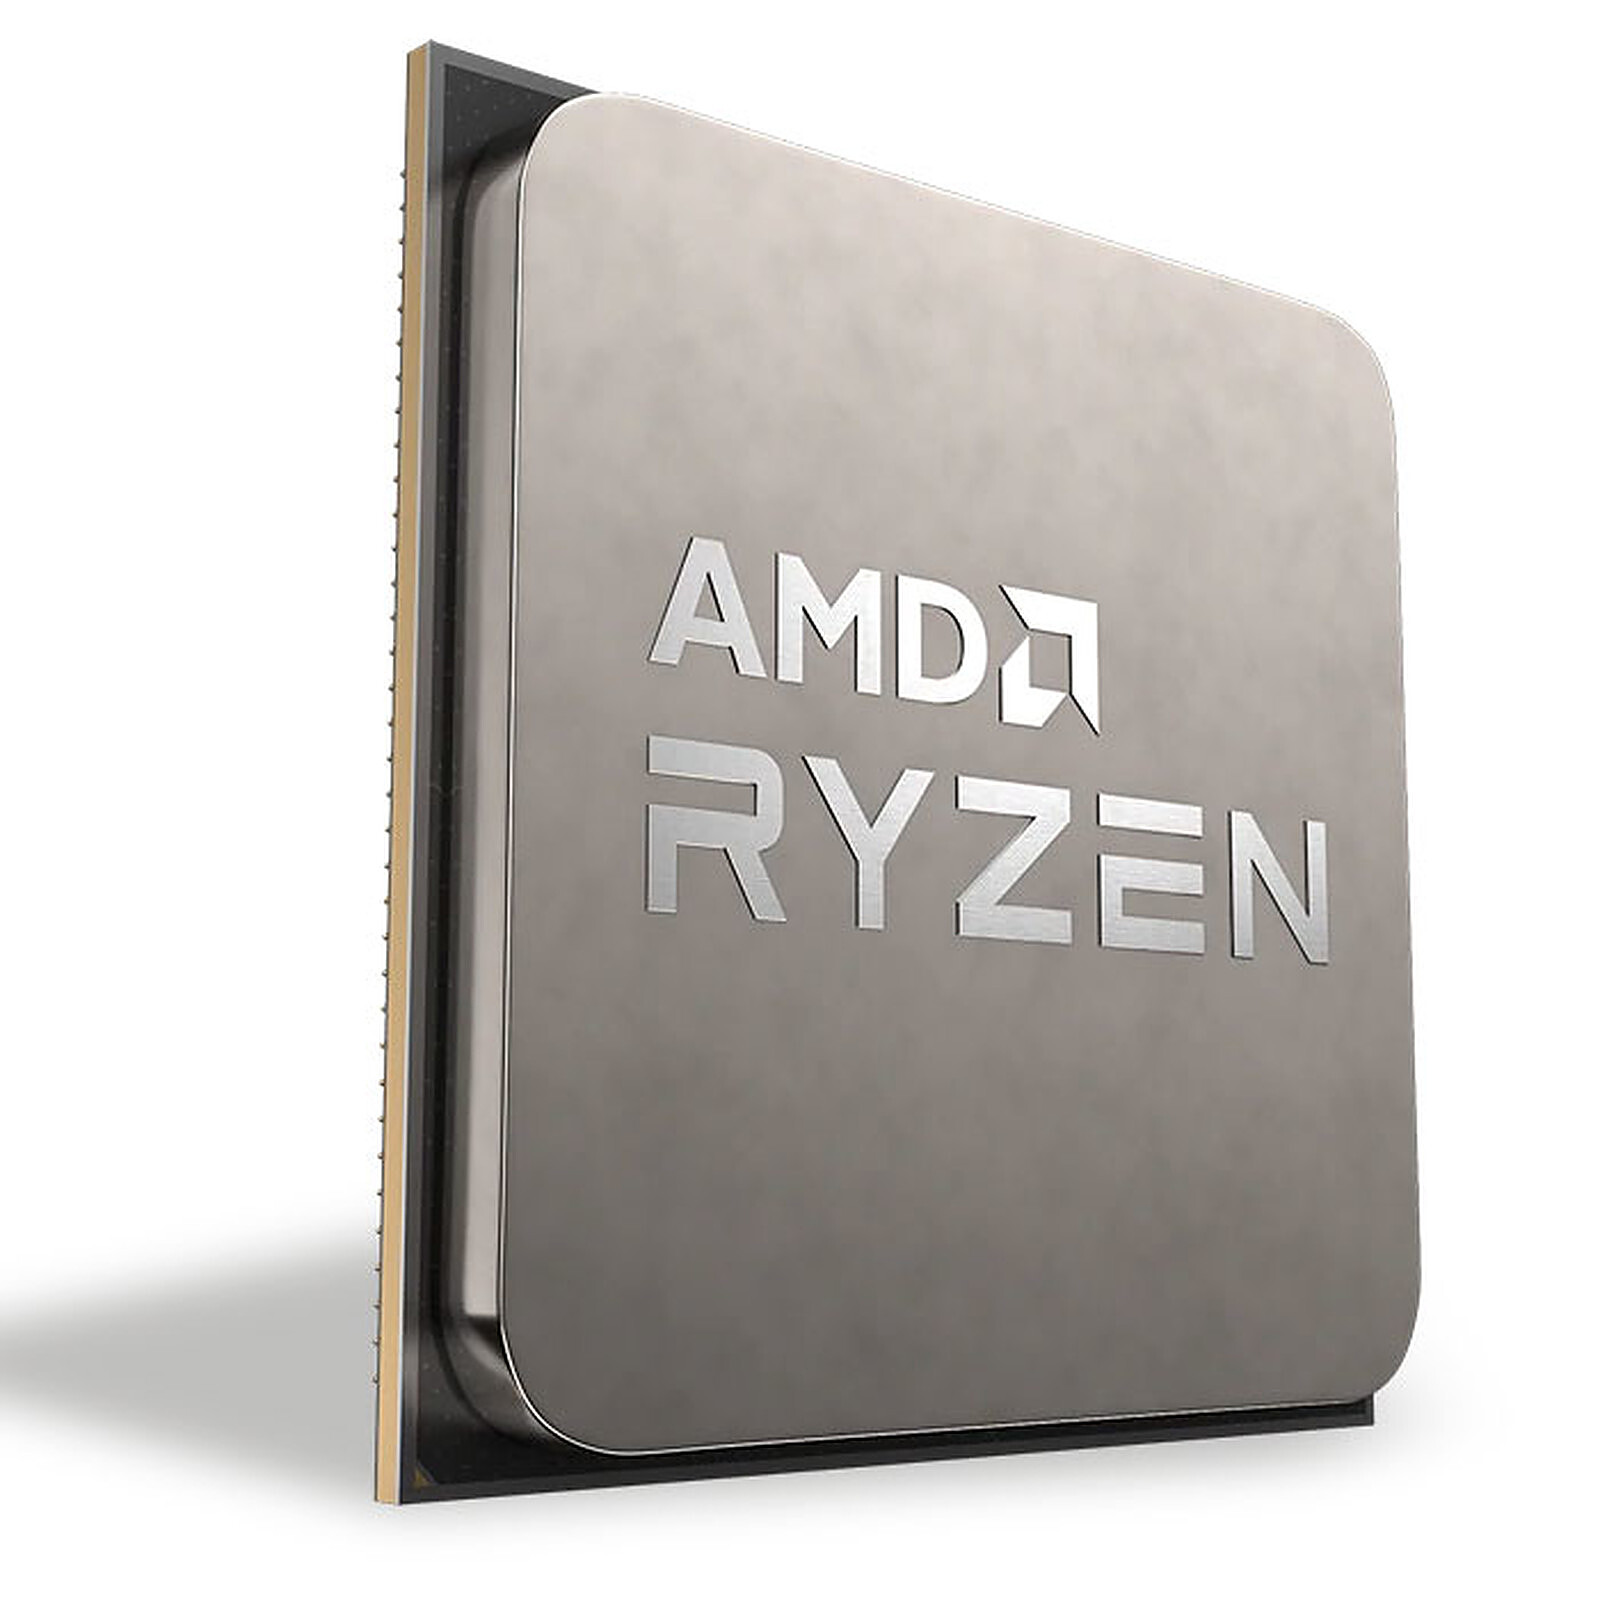 Processeur CPU AMD Ryzen 5 4500